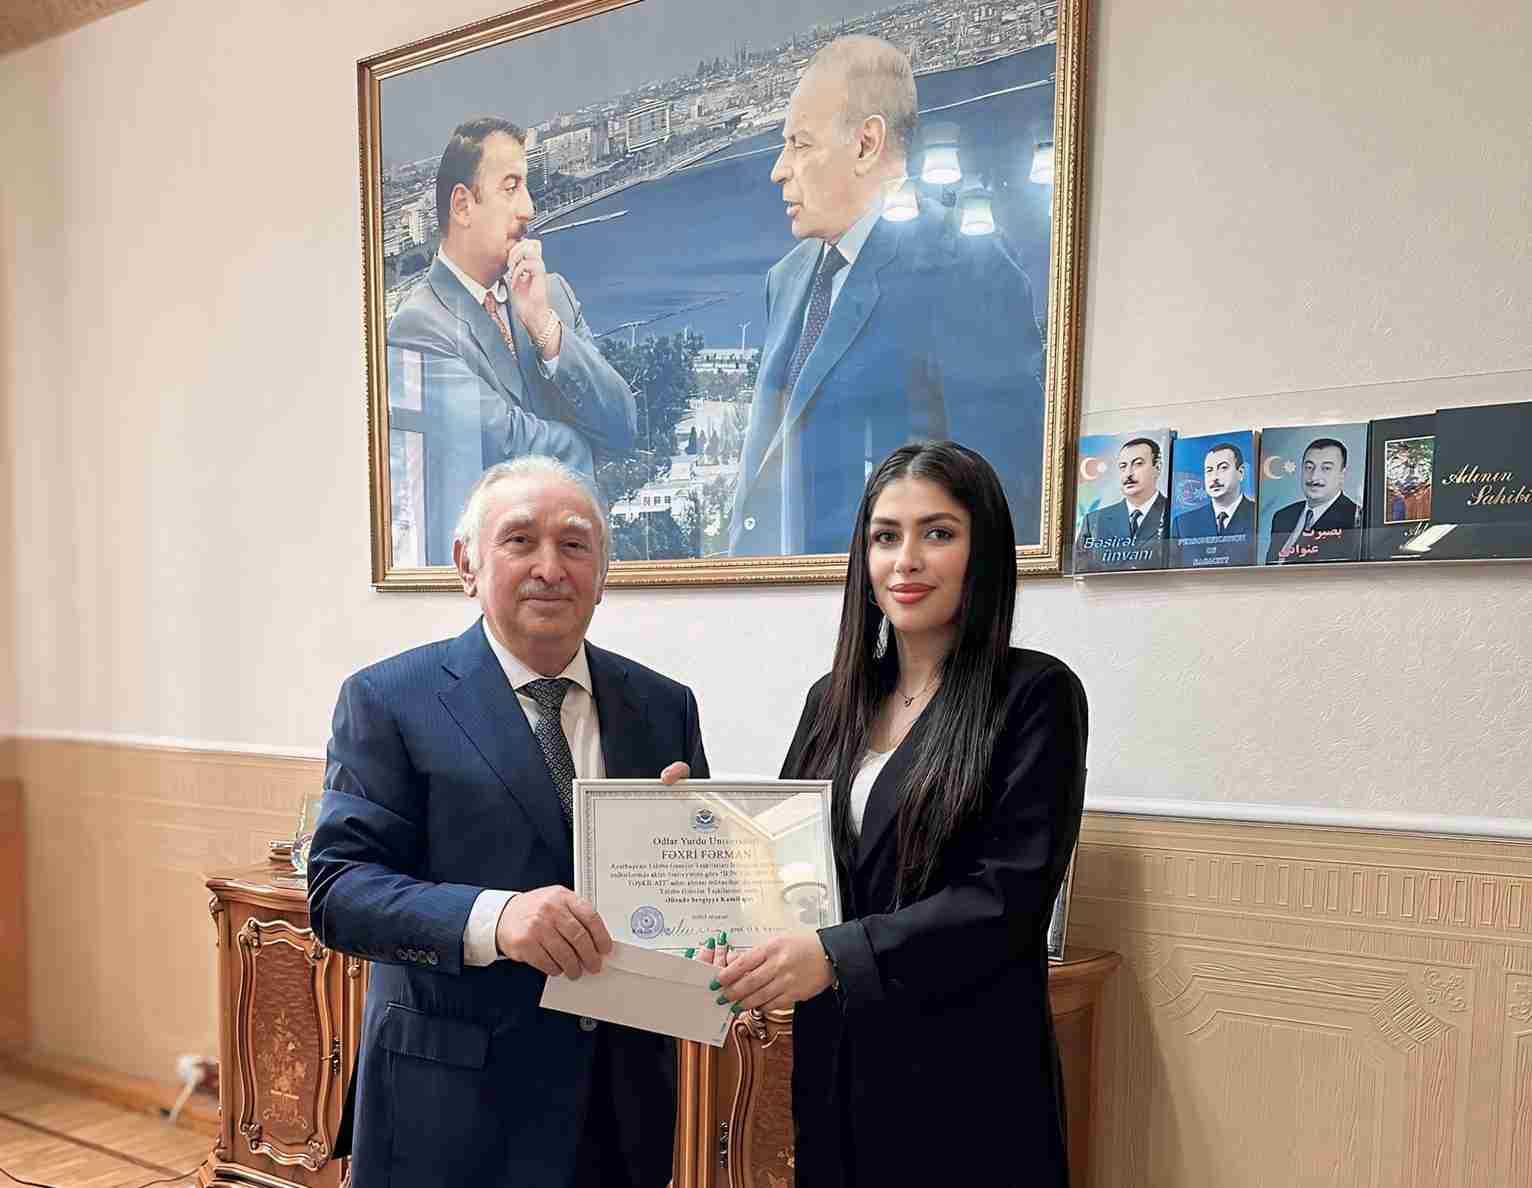 The chairman of the Student Youth Organization of Odlar Yurdu University was awarded